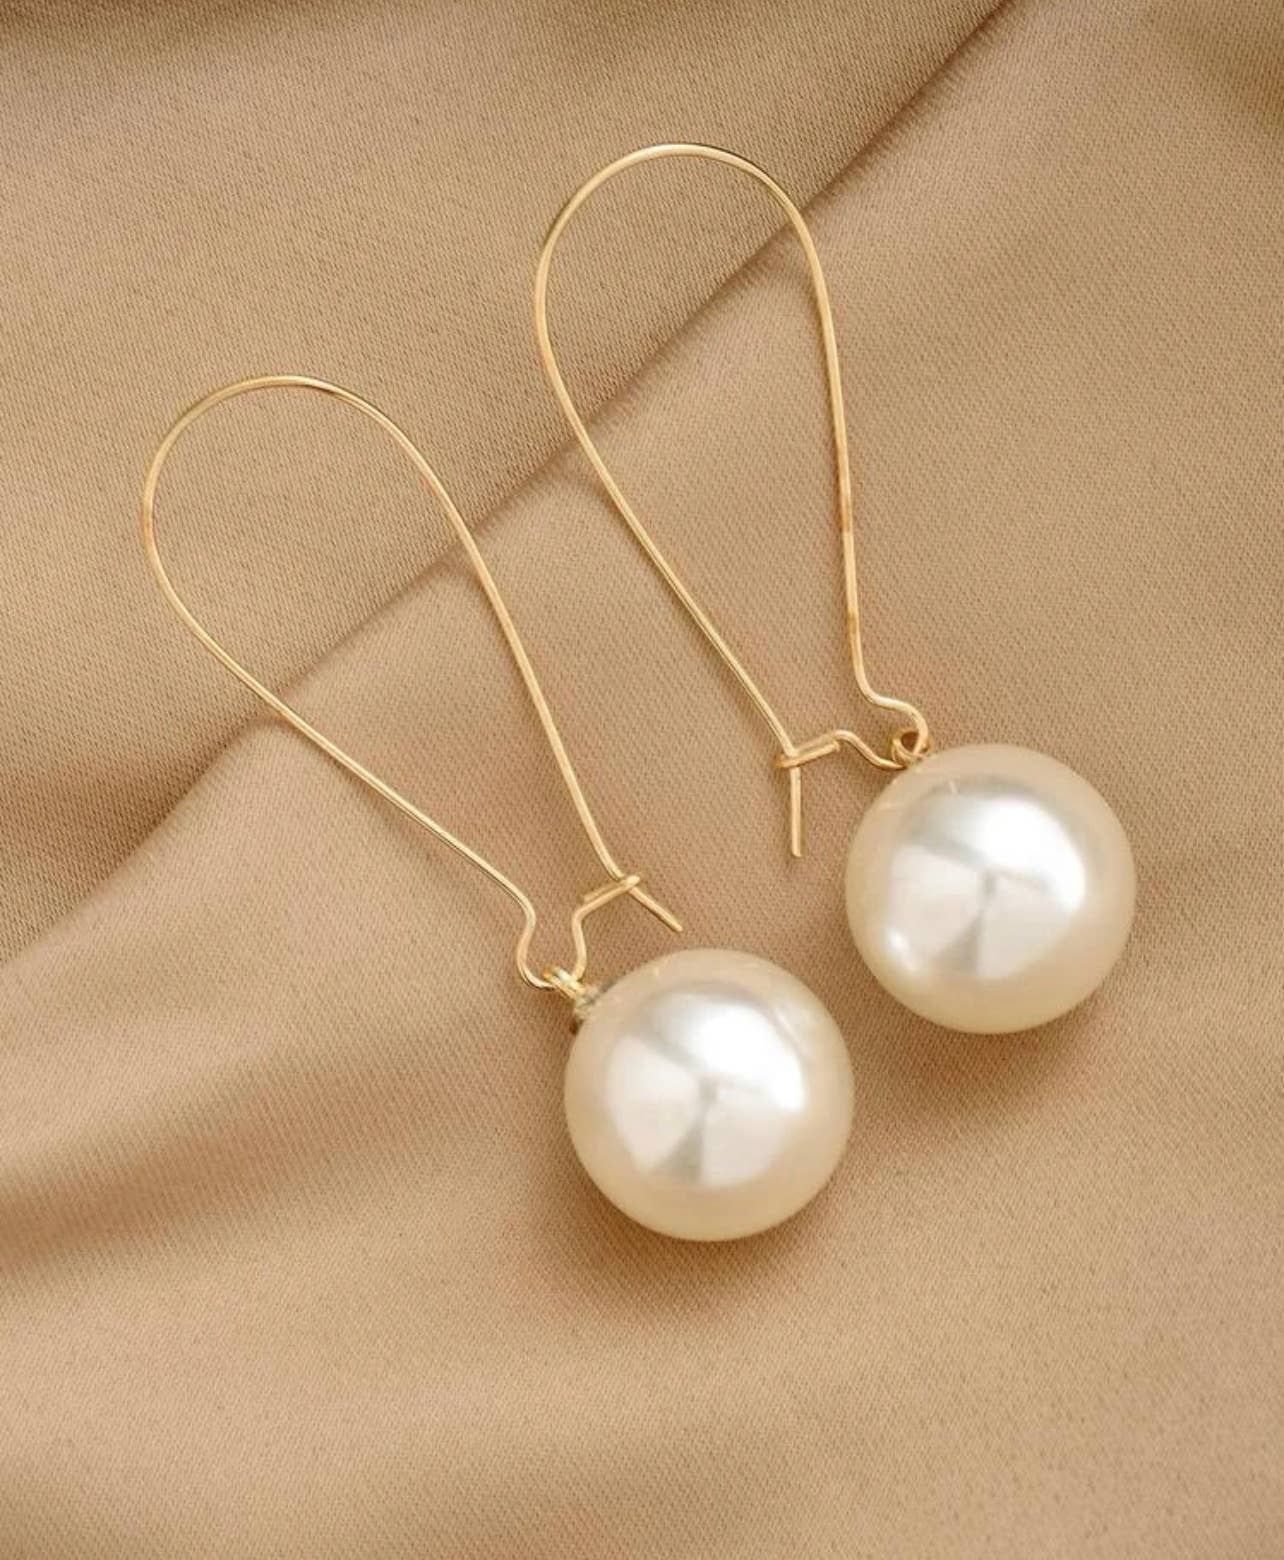 Pearl Elegant Dangle Earrings